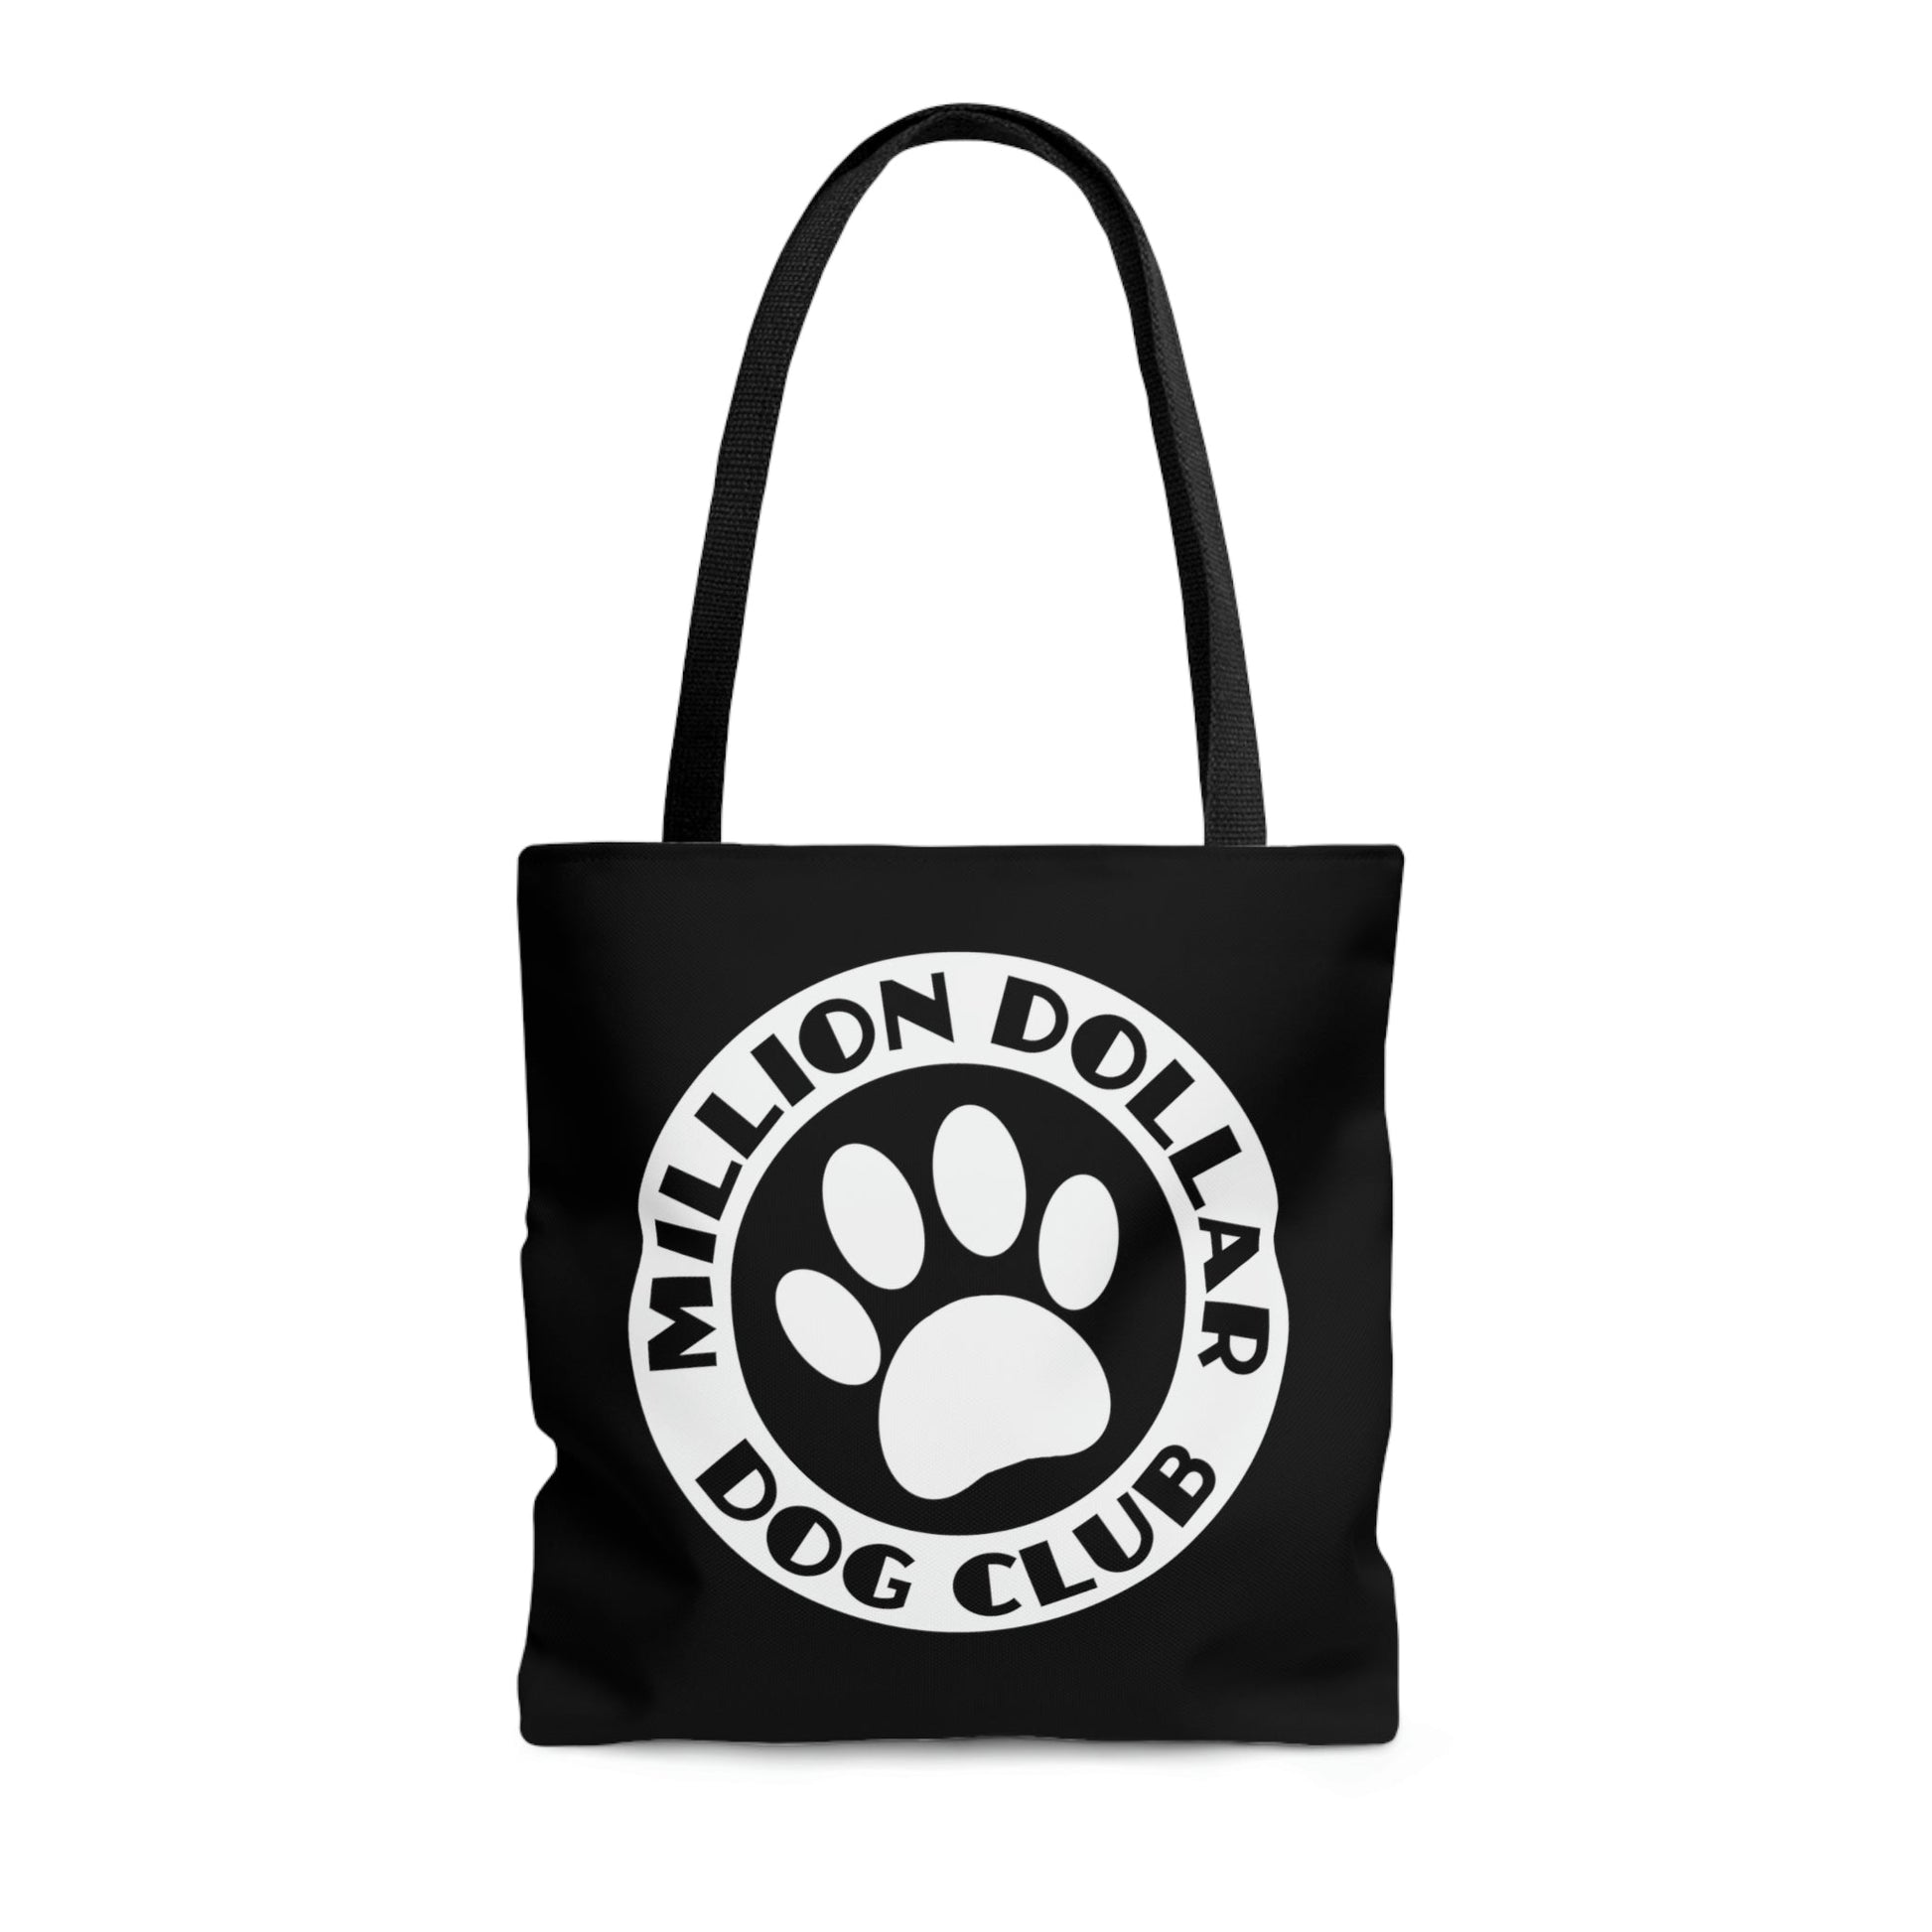 Million Dollar Dog Club | Tote Bag - Detezi Designs-25287410220011768117